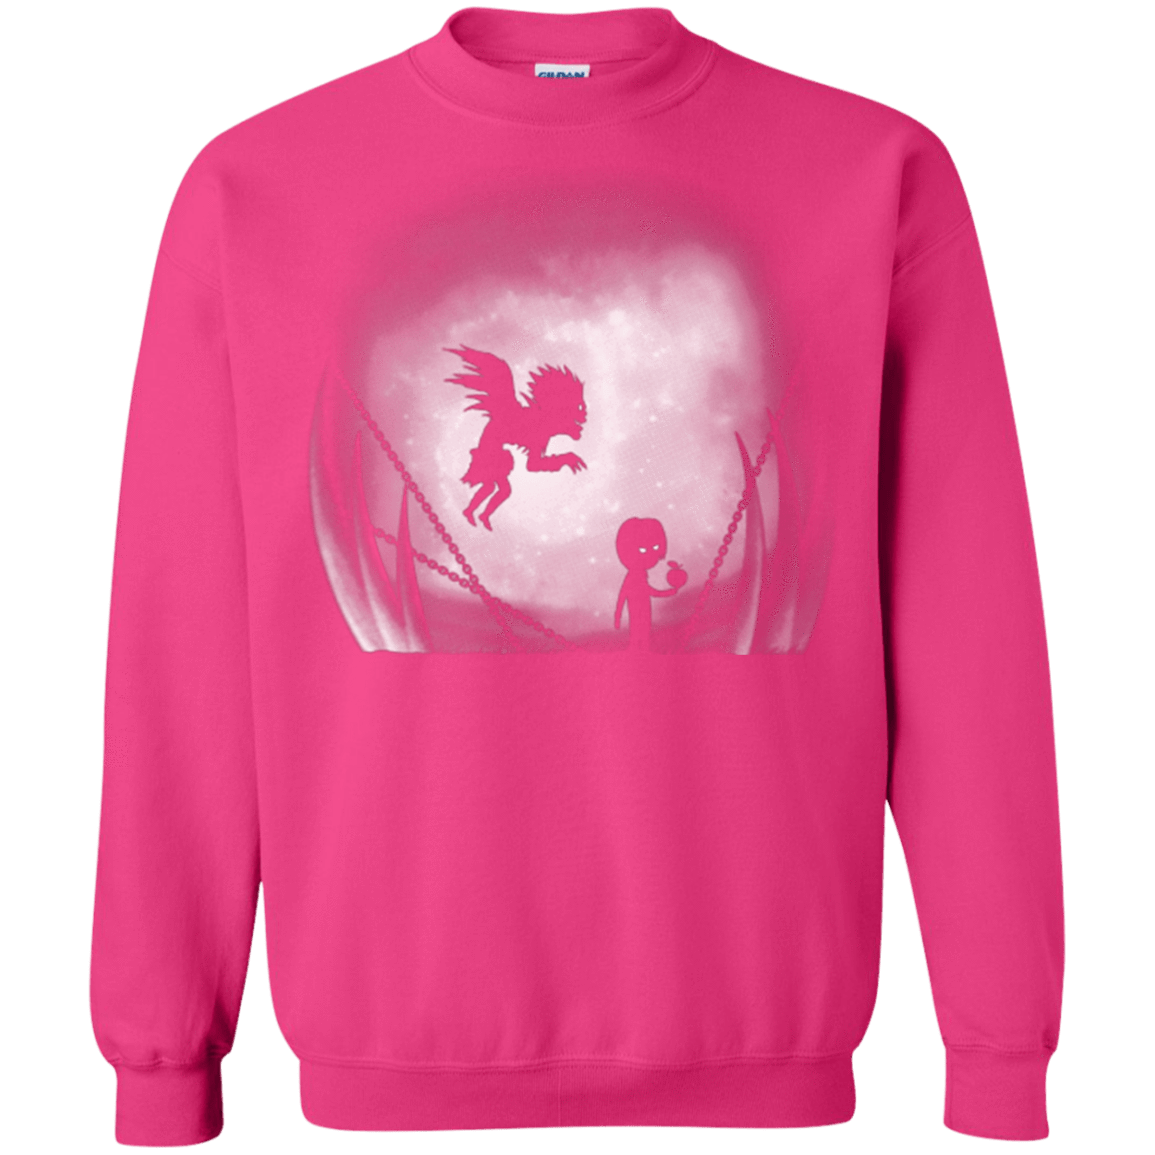 Sweatshirts Heliconia / Small Light in Limbo Crewneck Sweatshirt